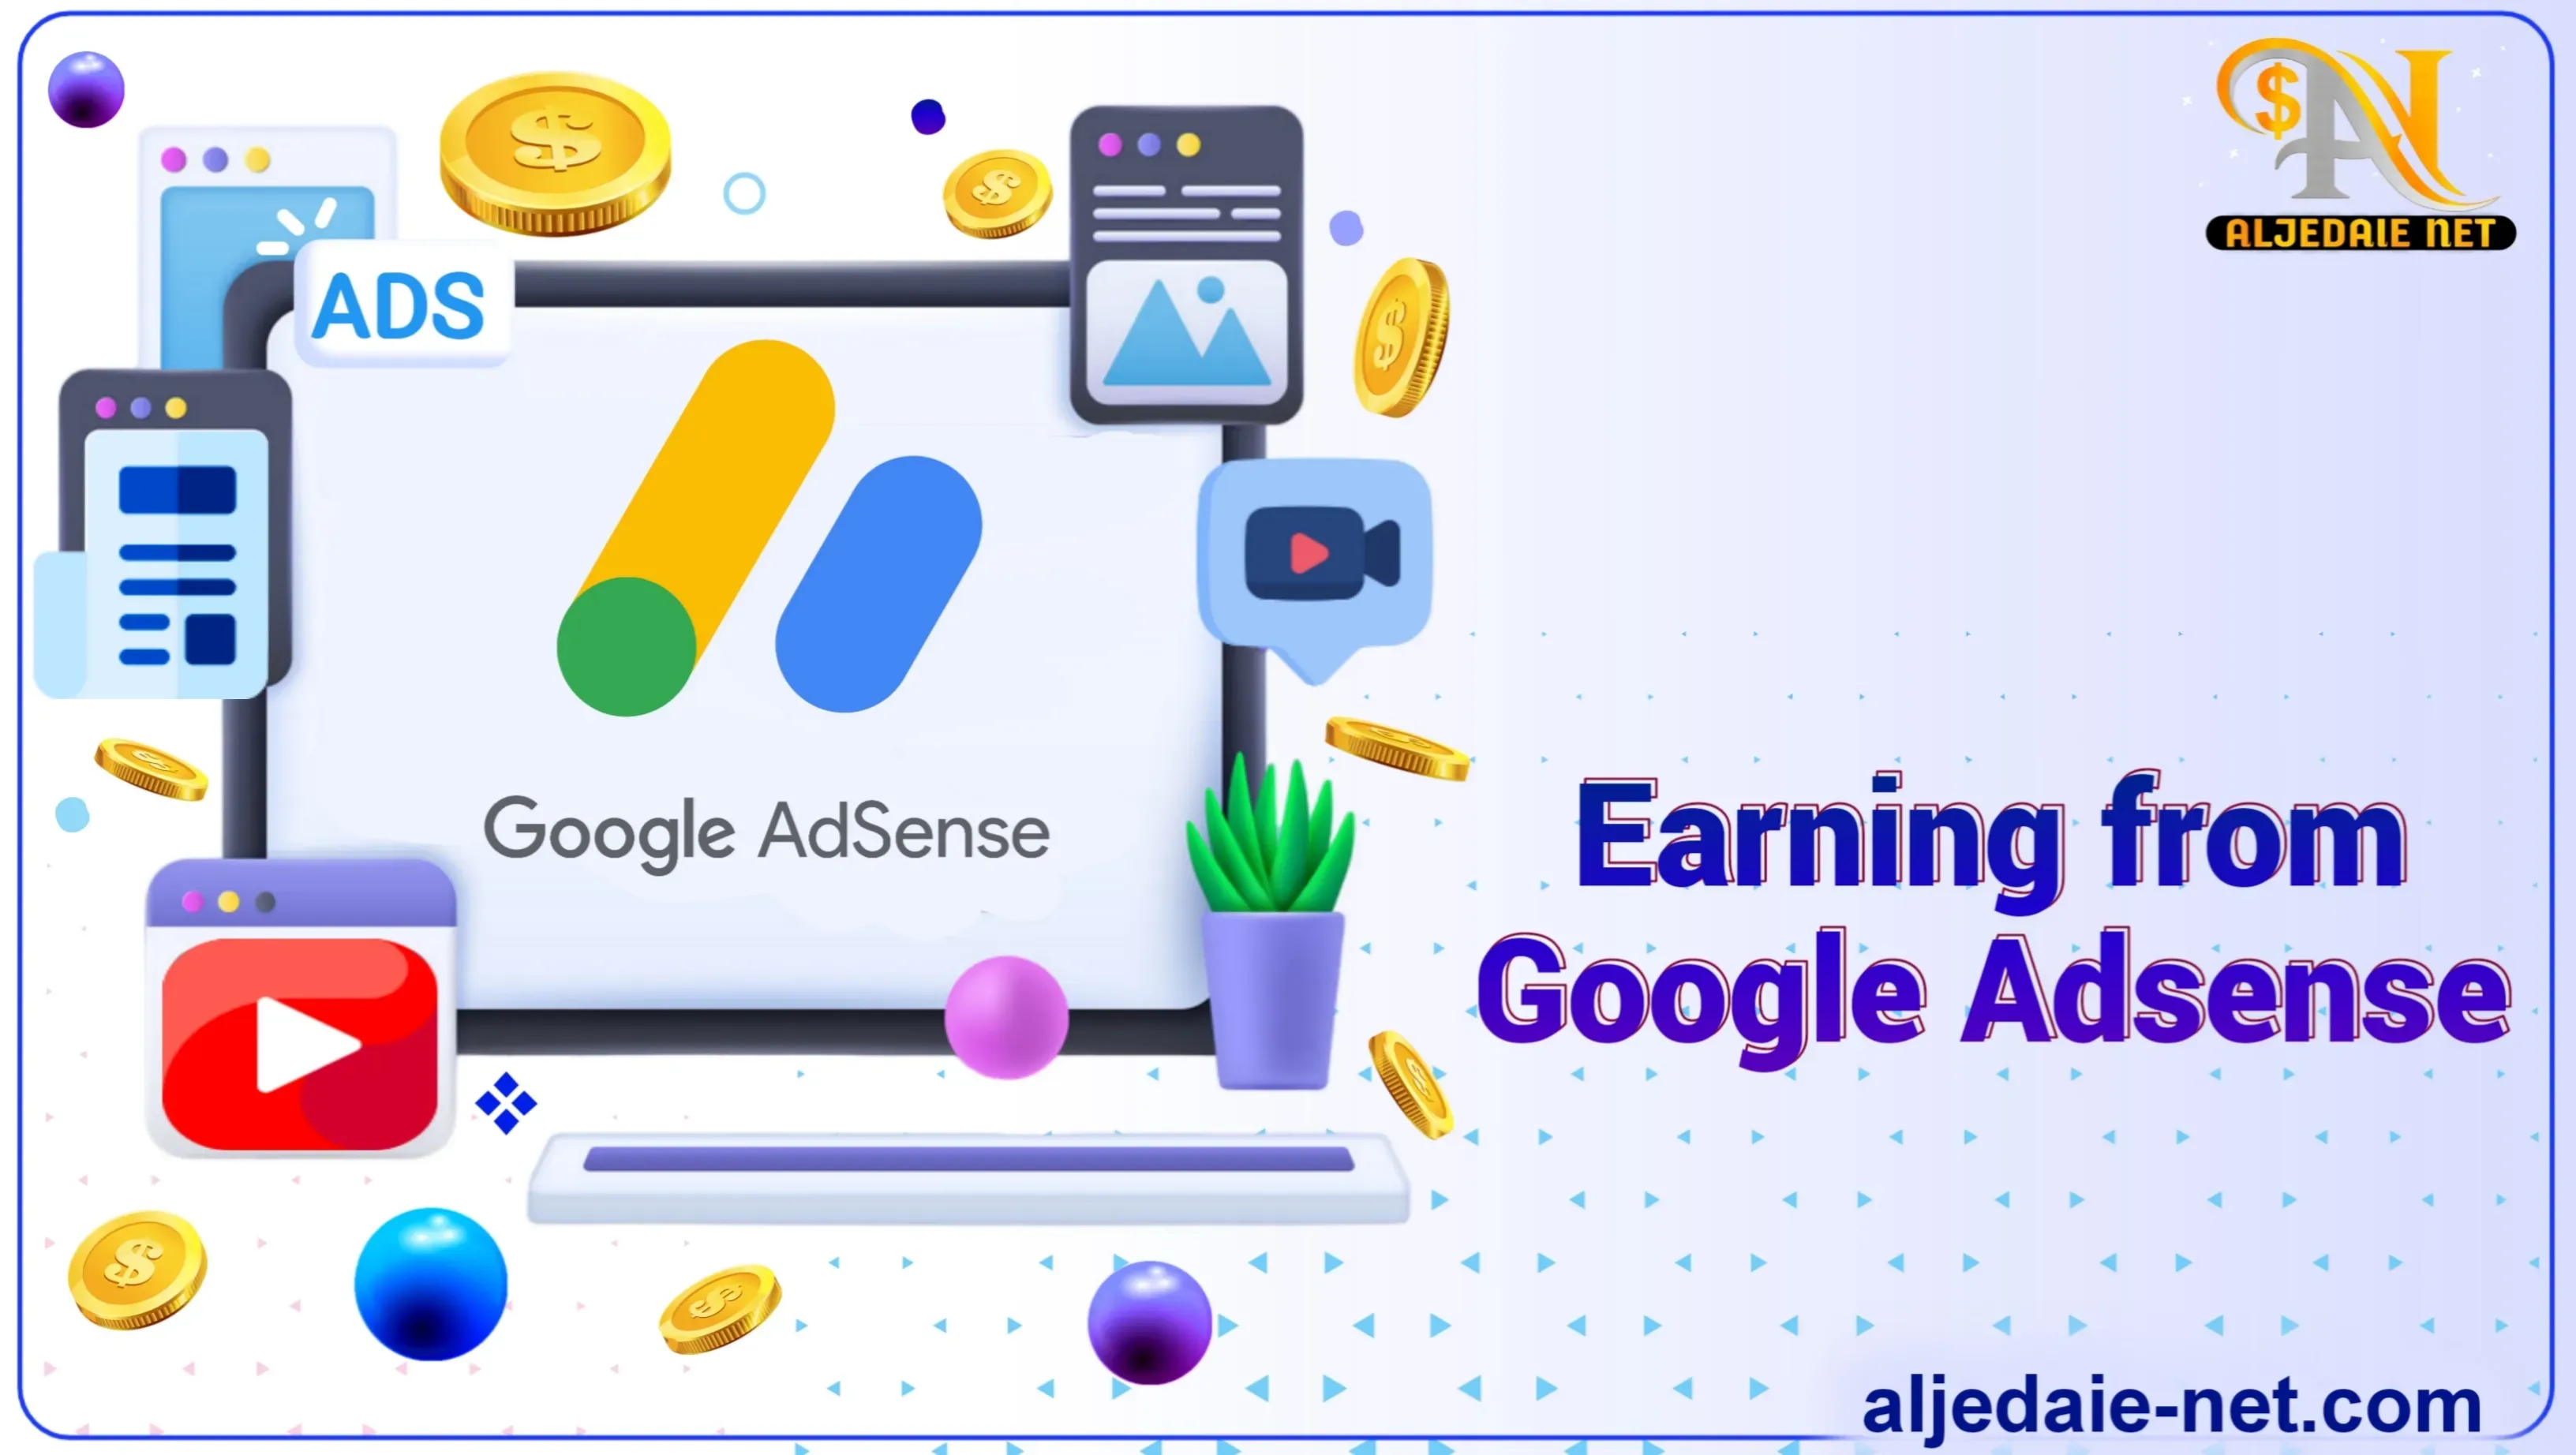 Earning from Google Adsense